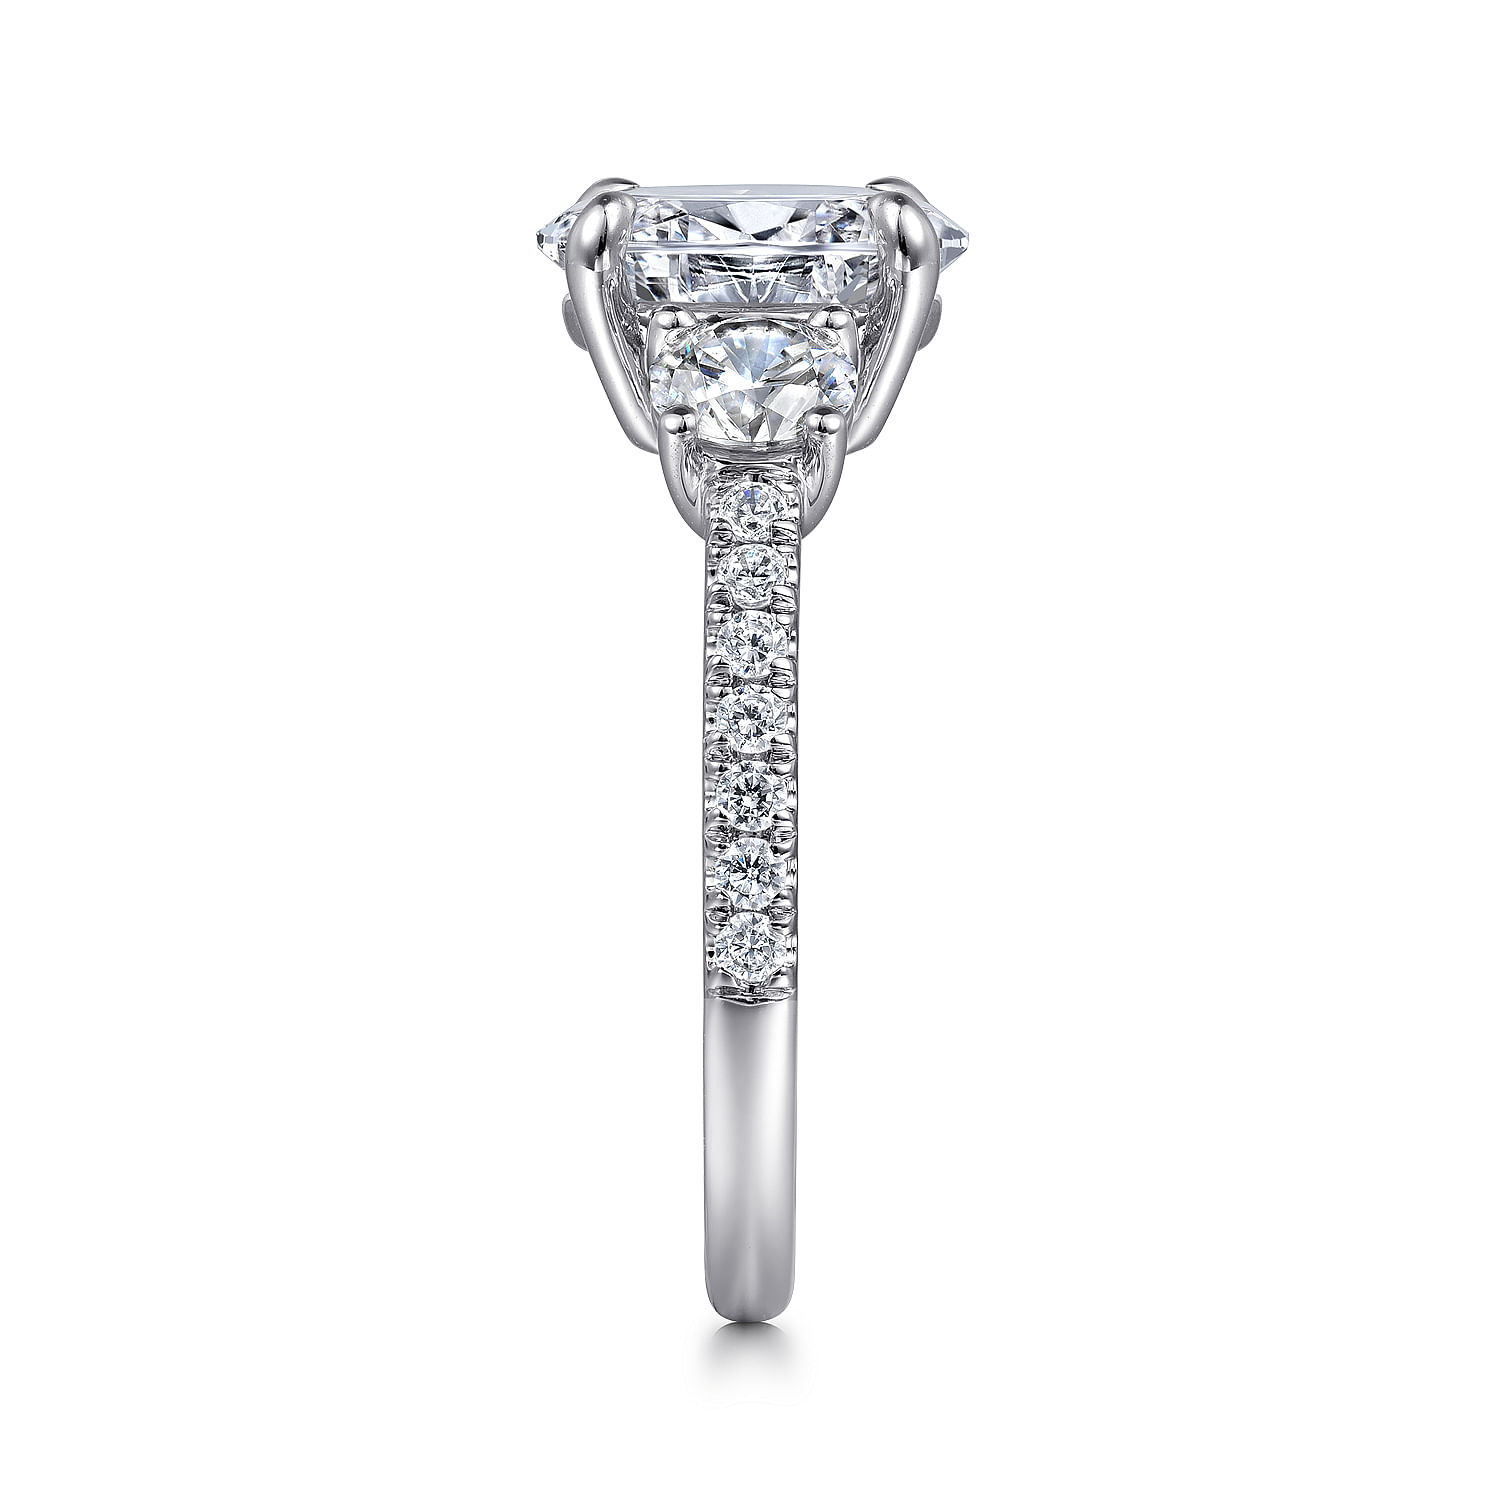 Gorgeous Oval Cut Engagement Rings Online | Gabriel & Co.